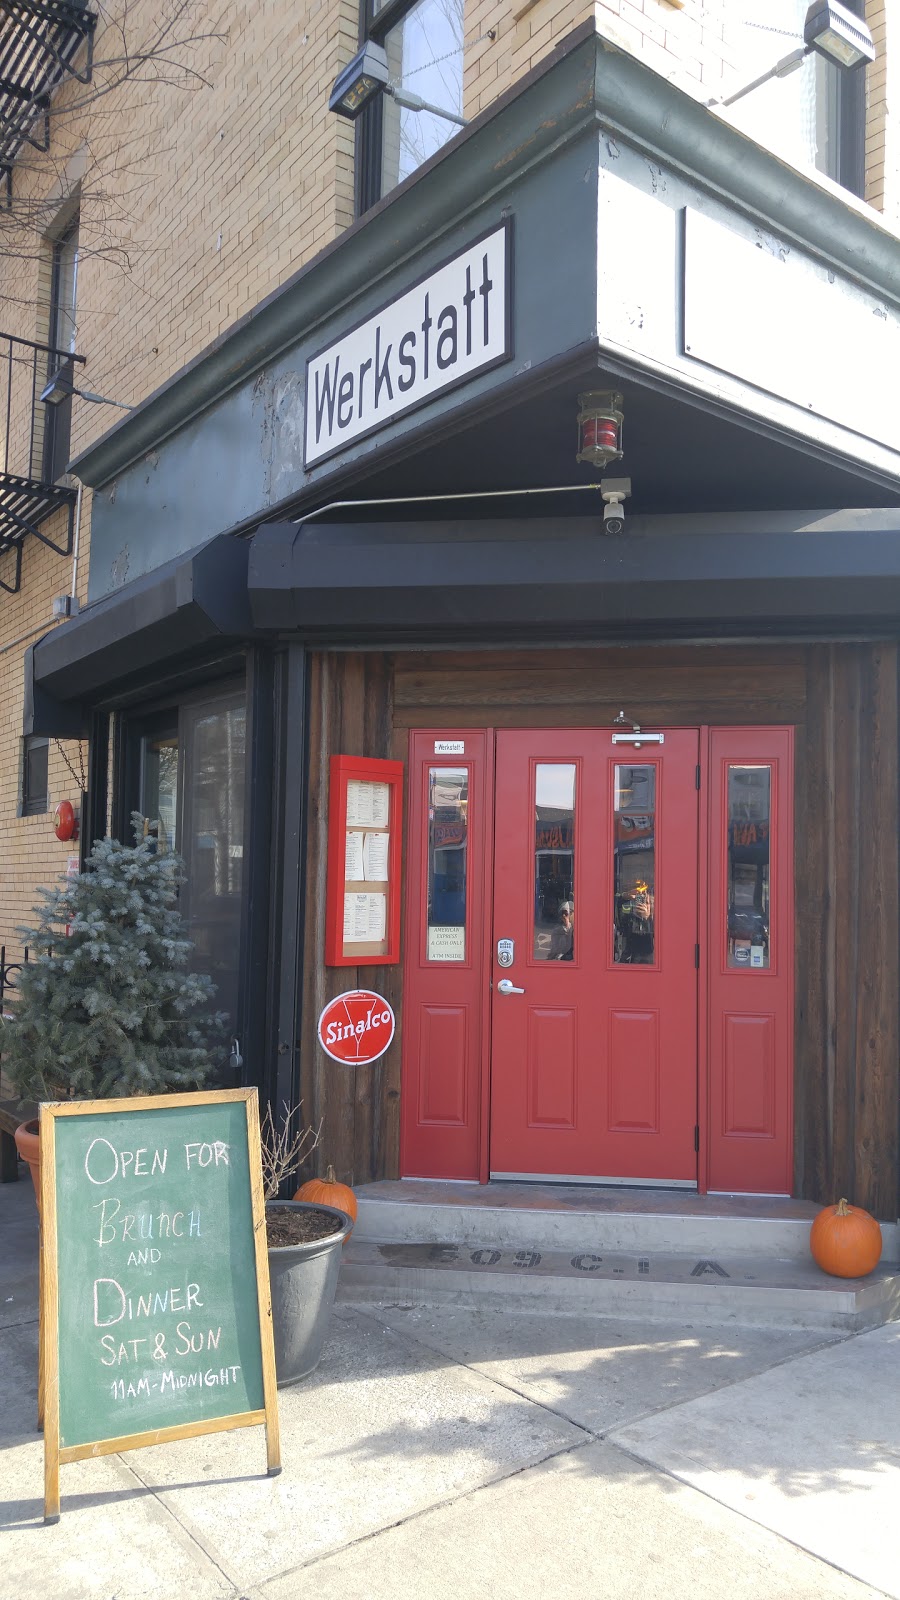 Photo of Werkstatt in Brooklyn City, New York, United States - 2 Picture of Restaurant, Food, Point of interest, Establishment